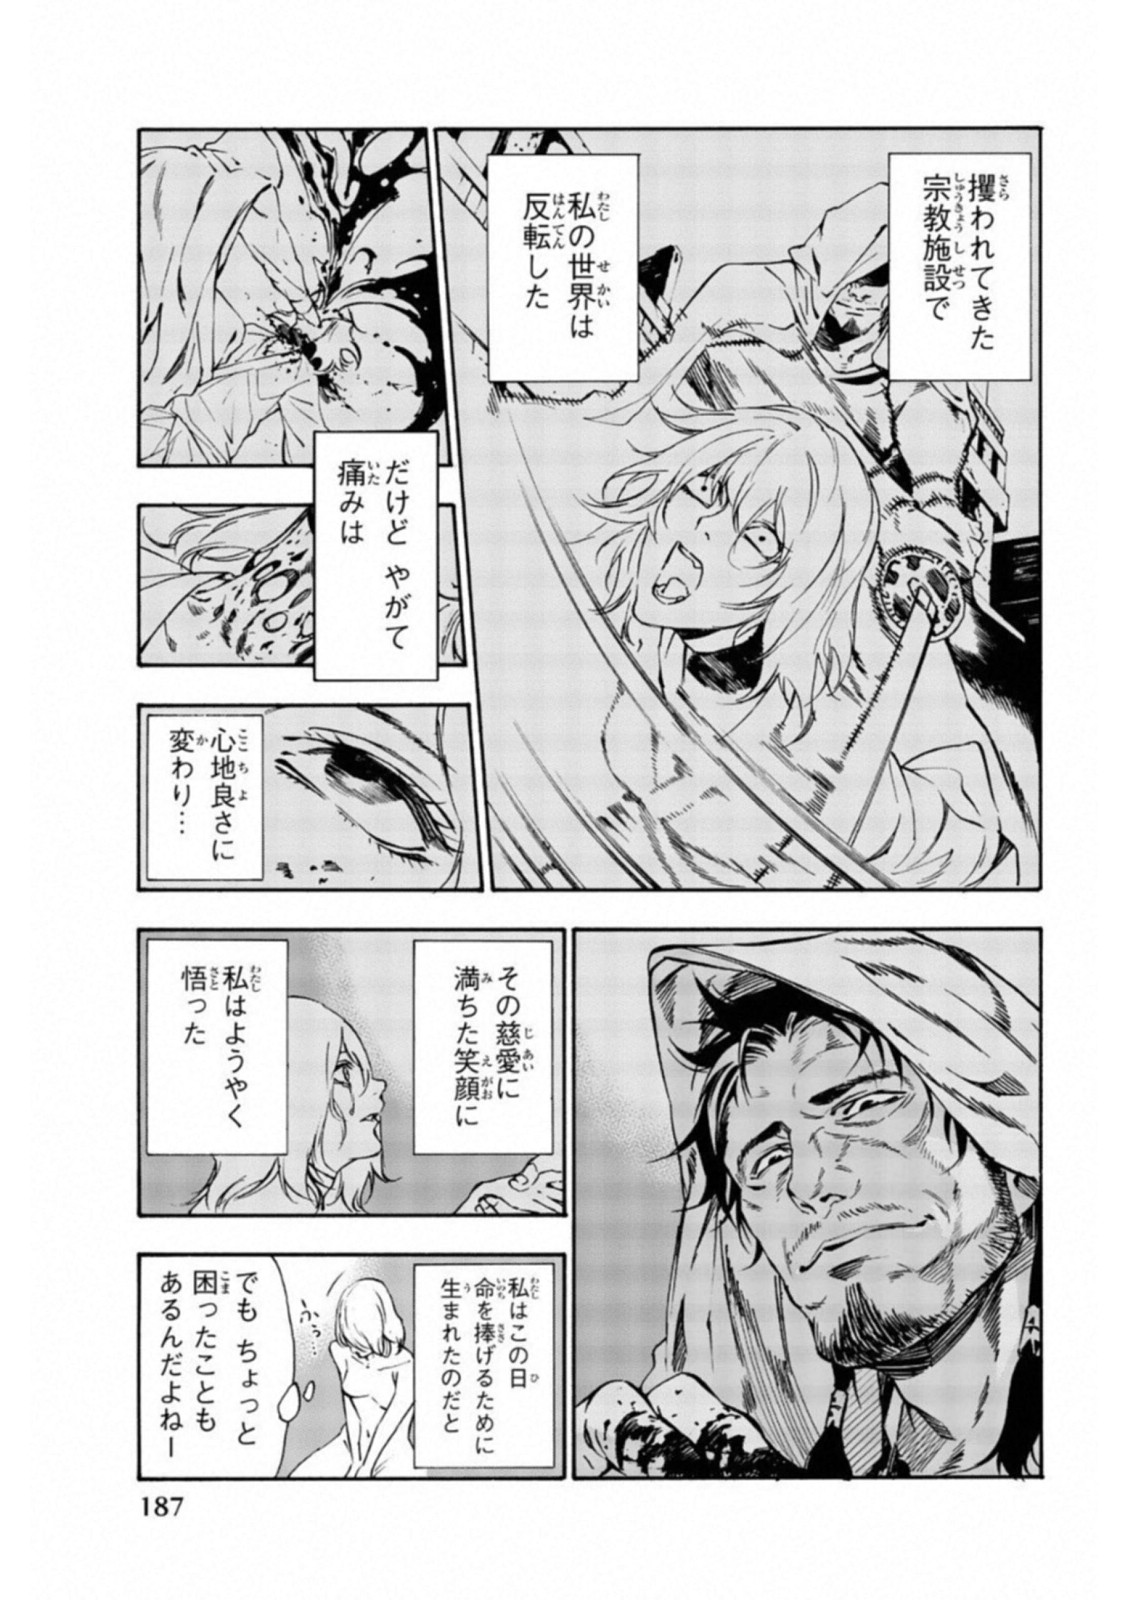 Zetsubou no Rakuen - Chapter 43.2 - Page 2